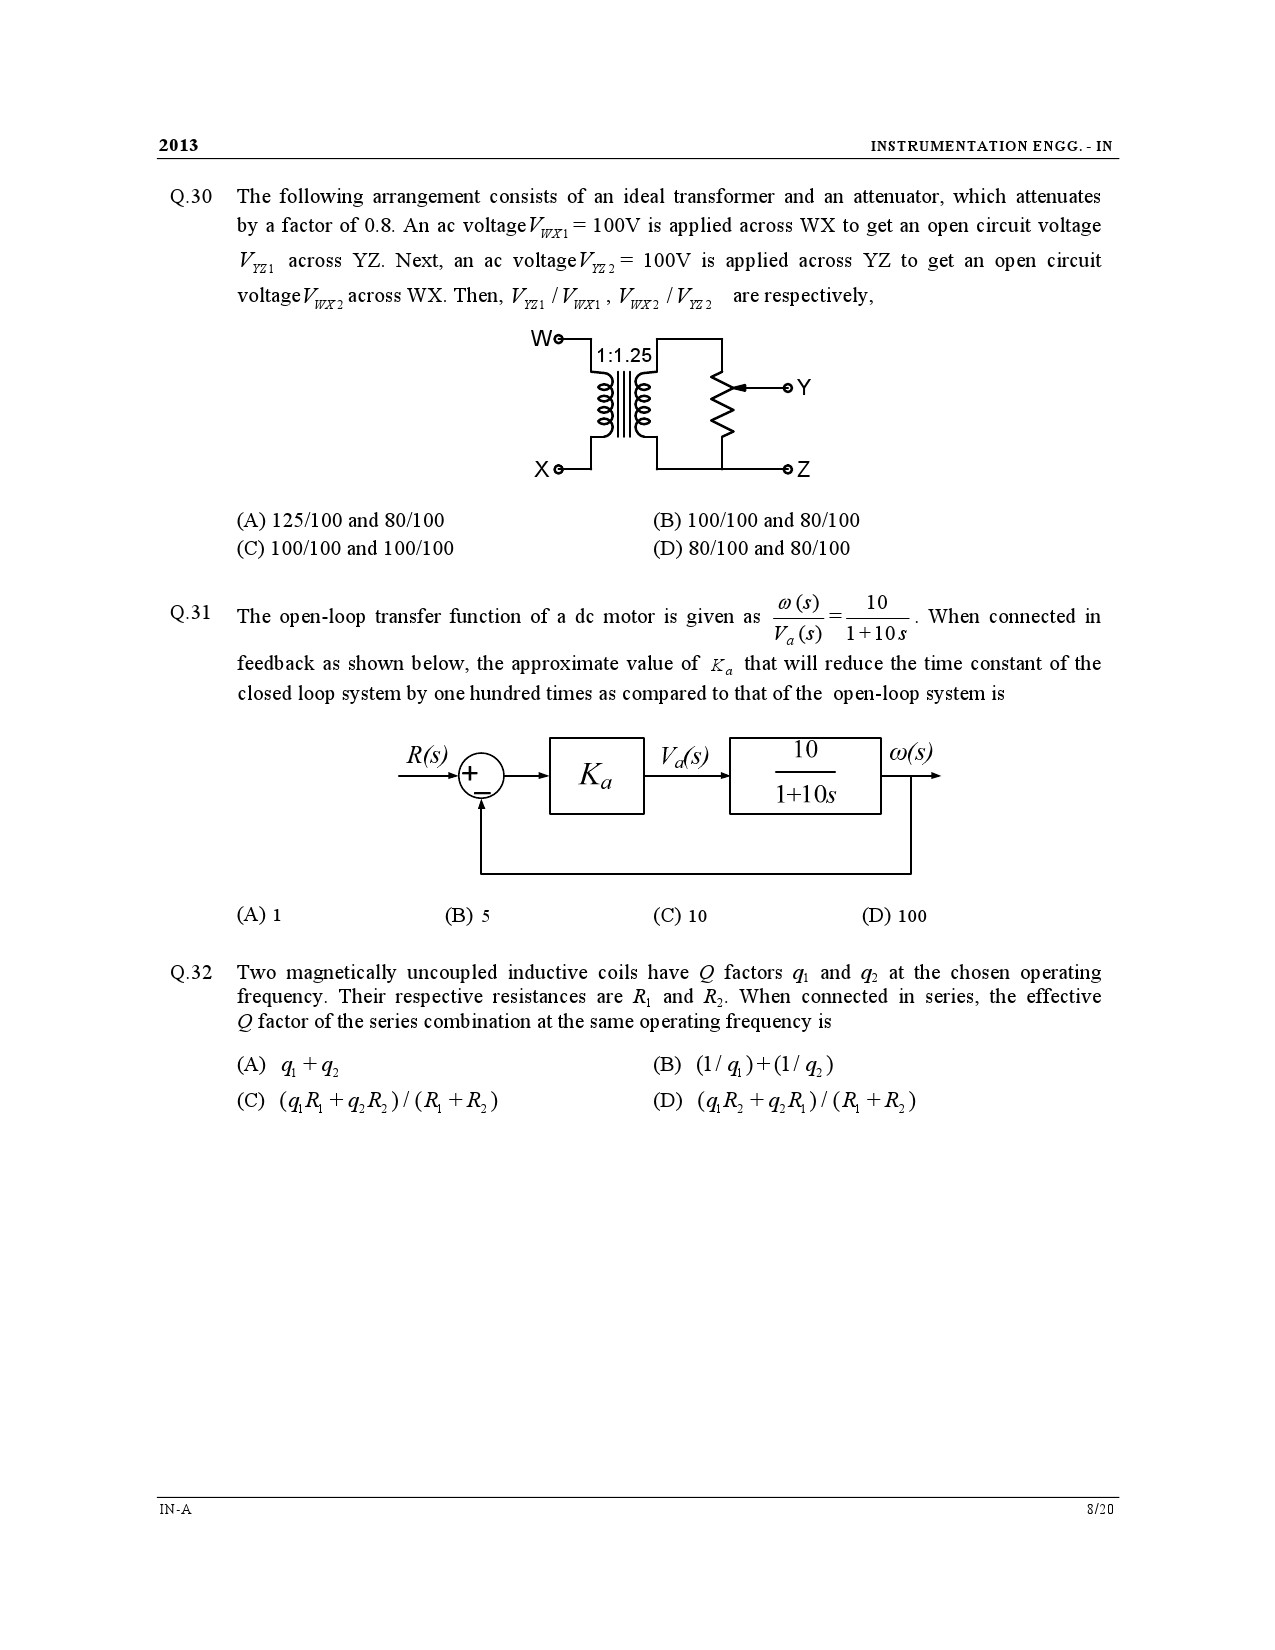 GATE Exam Question Paper 2013 Instrumentation Engineering 8